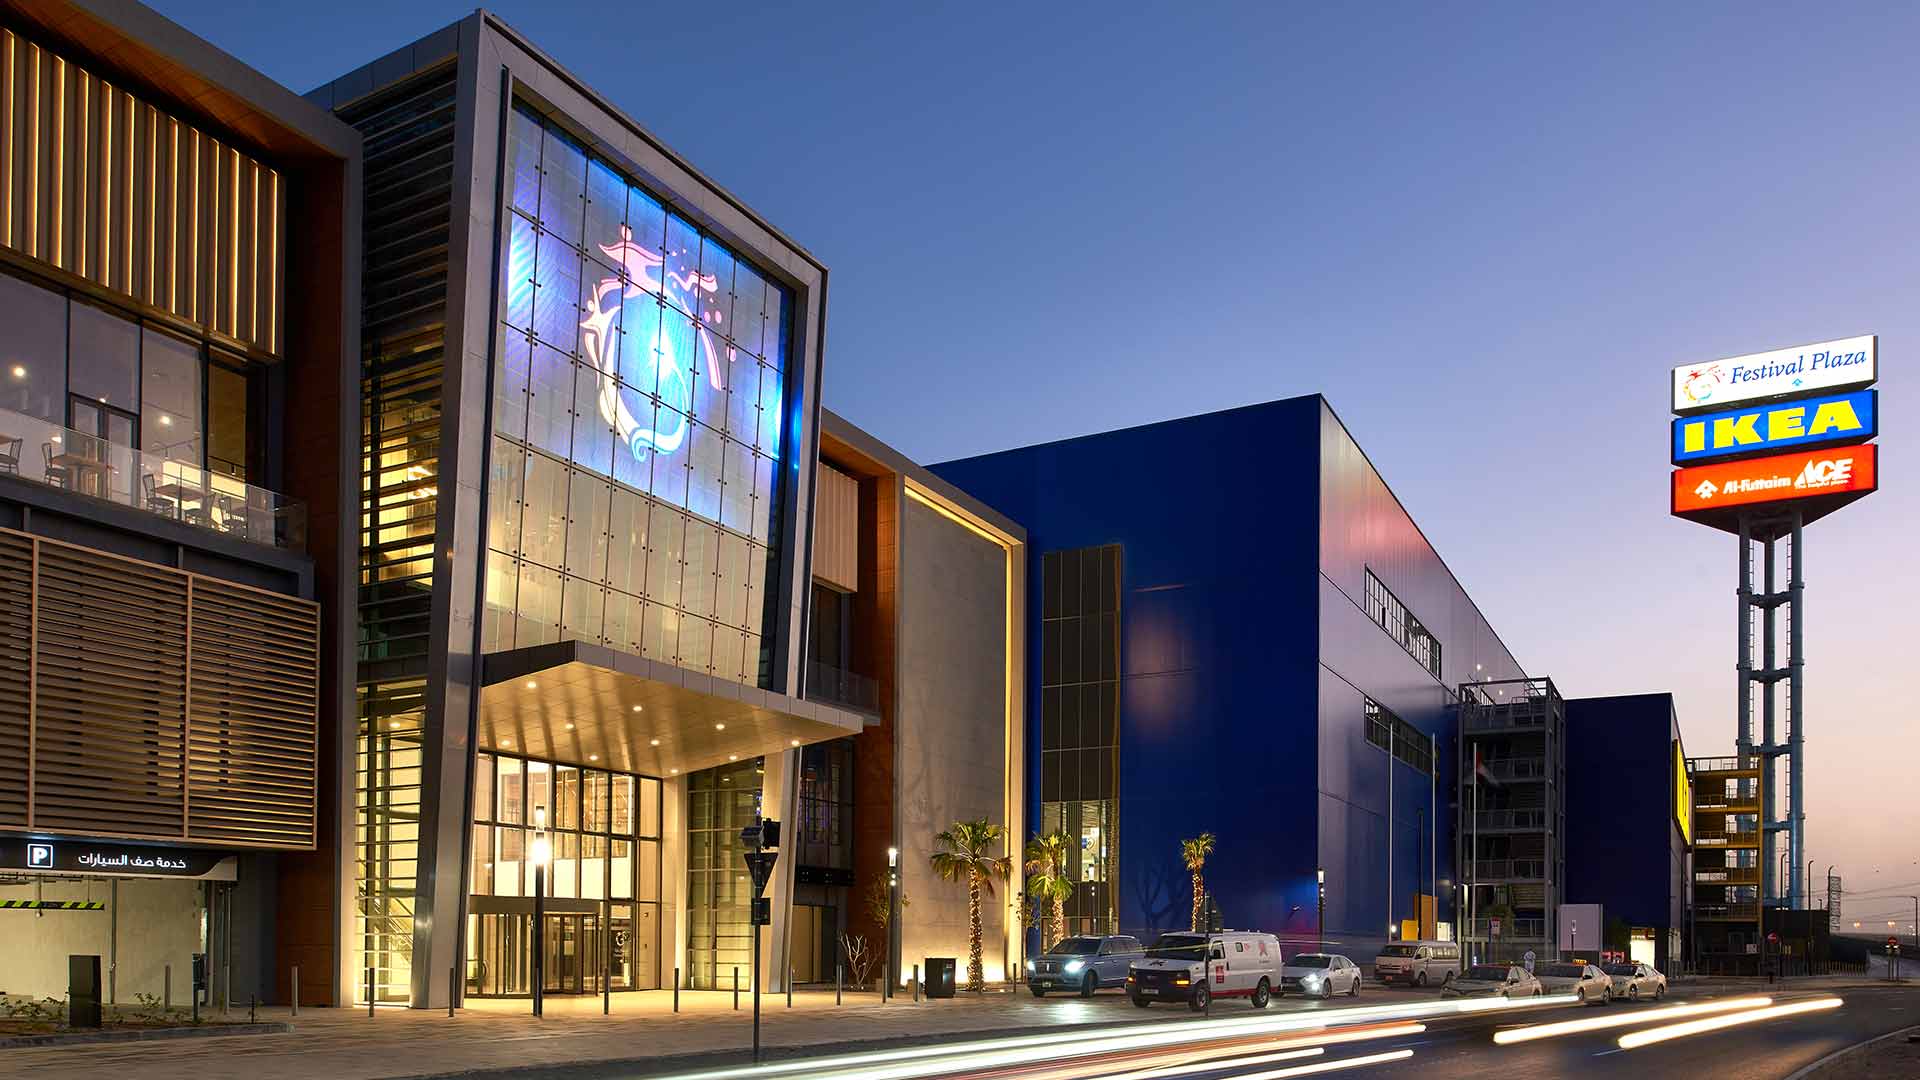 Architectural Lighting Design Shopping Mall Exterior Angular Modern Design Illuminated Facade Details Festival Plaza Ikea Dubai Nulty